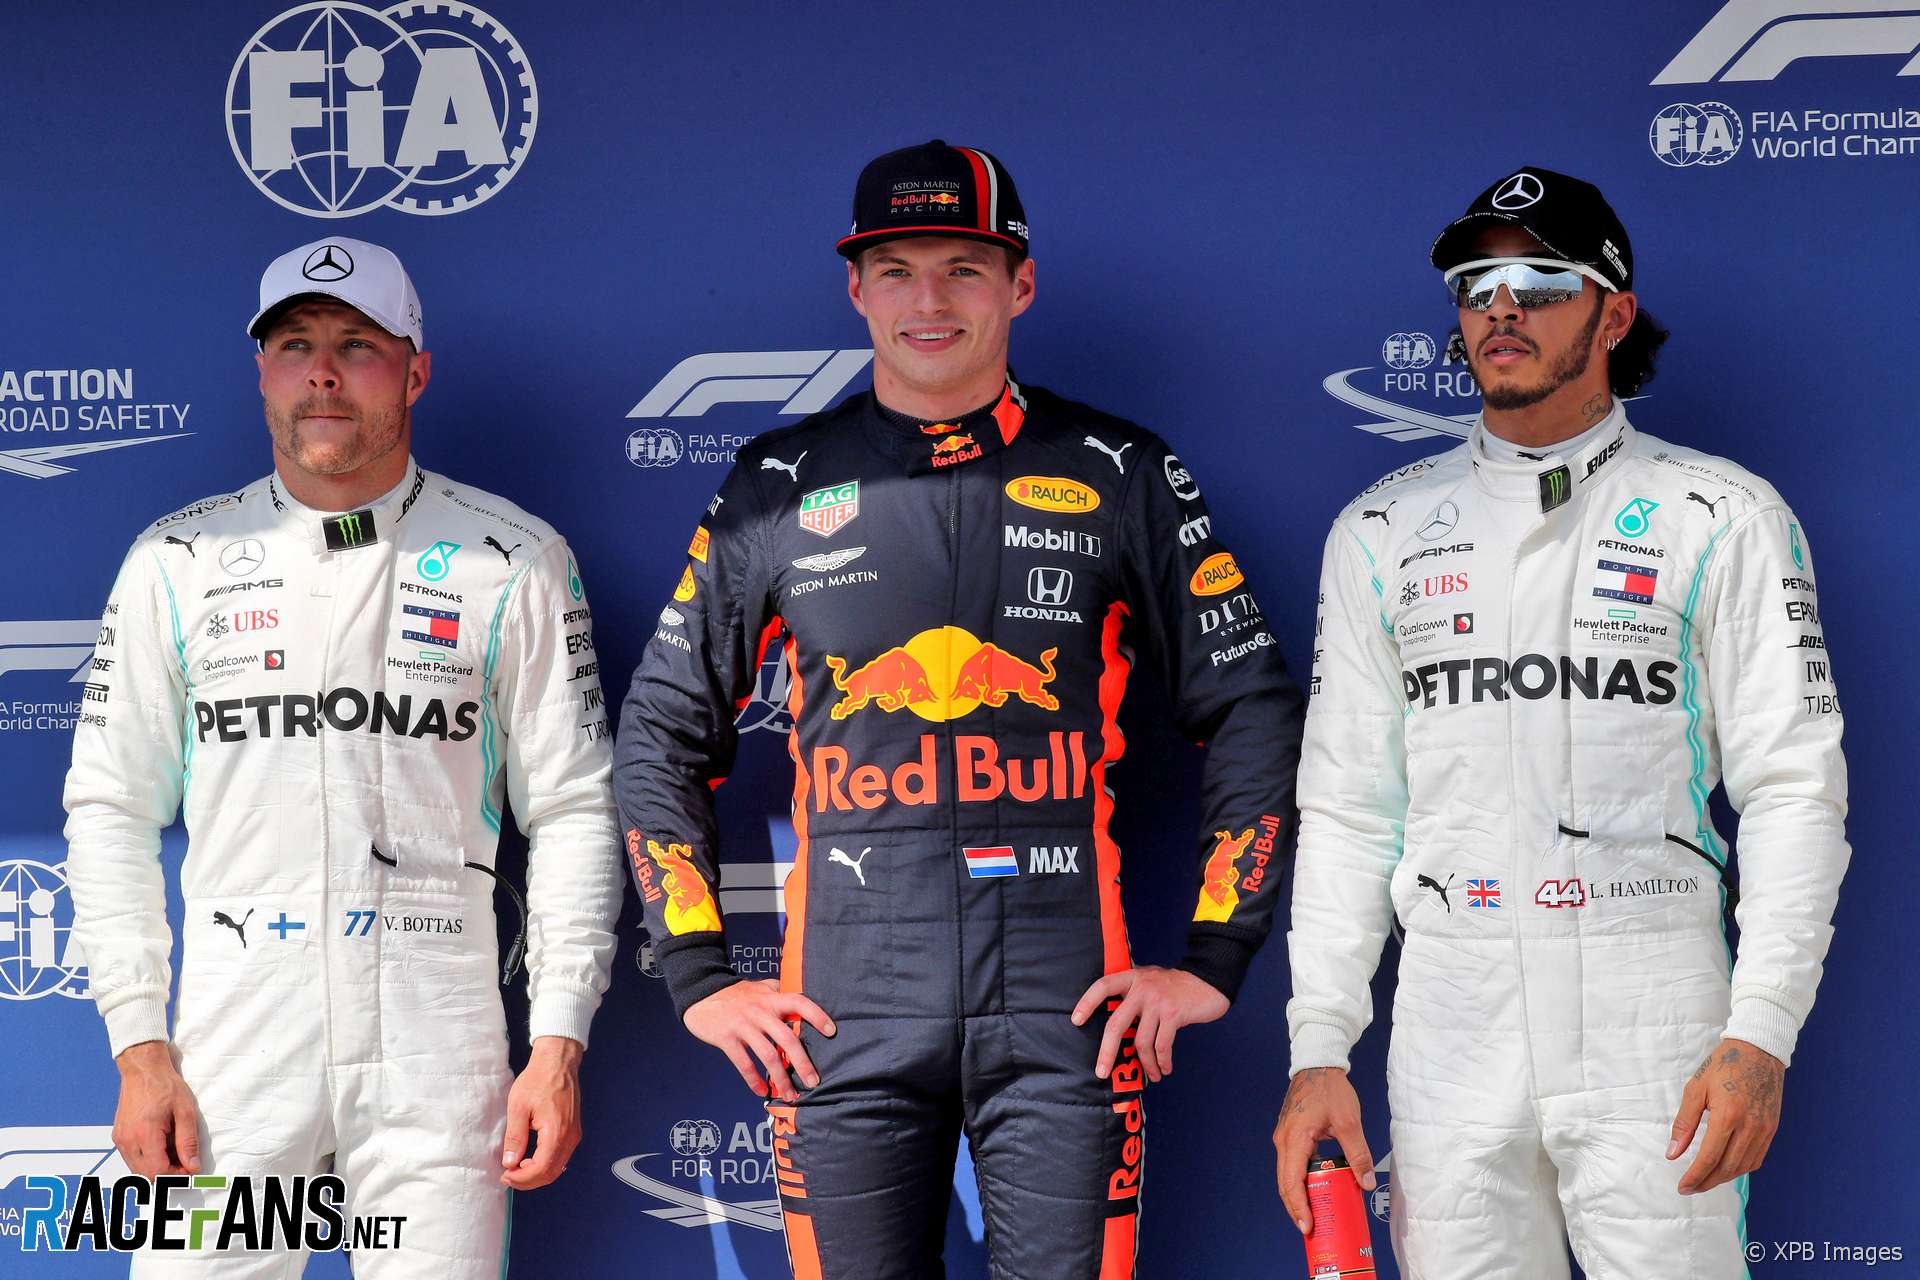 Valtteri Bottas, Max Verstappen, Lewis Hamilton, Hungaroring, 2019